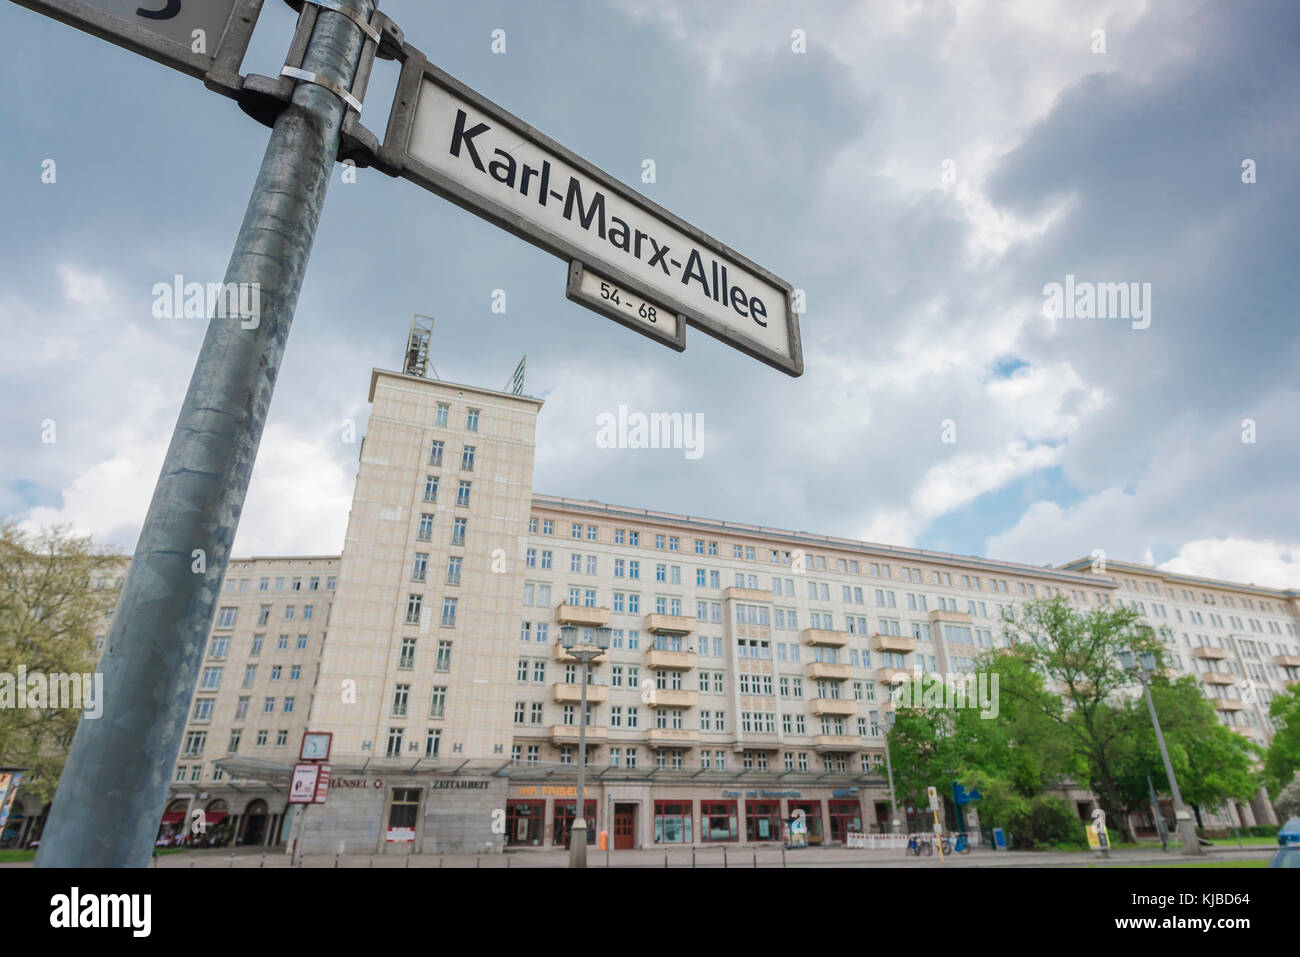 Berlin Karl Marx Allee, view of a street sign in Karl Marx Allee in the former communist eastern sector of Berlin, Germany. Stock Photo